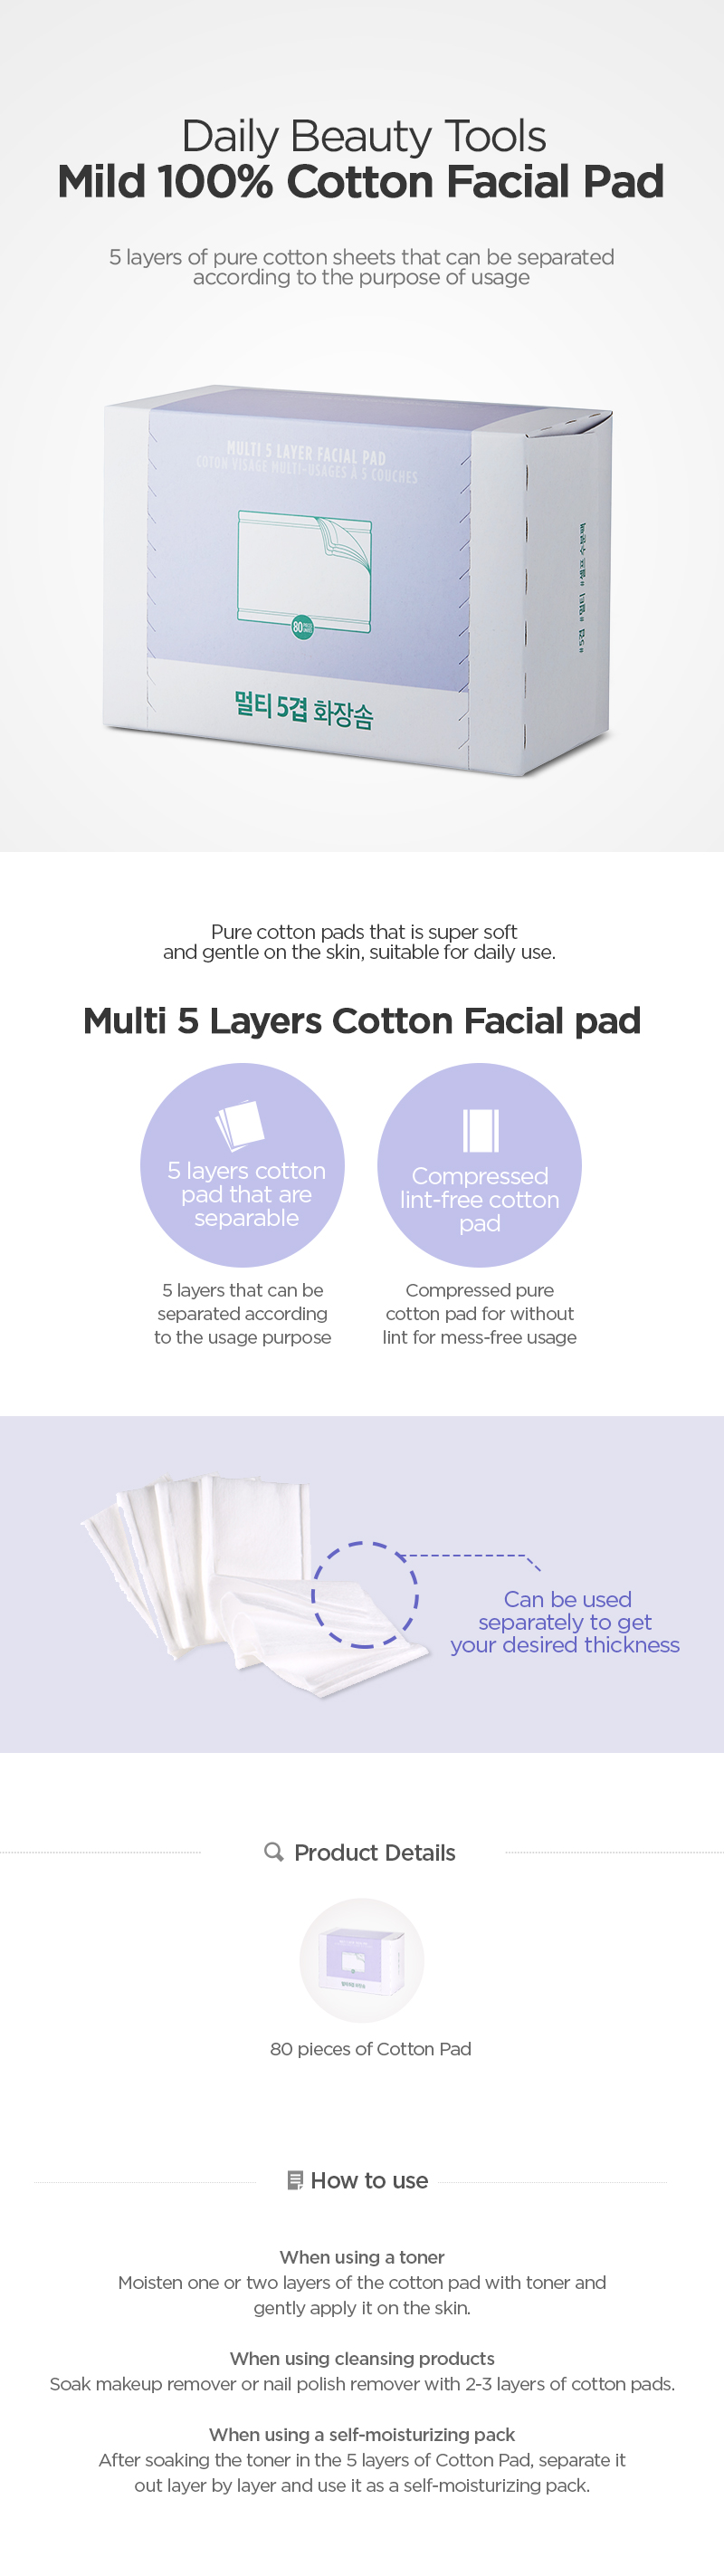 Daily Beauty Tools Multi 5 Layer Facial Pad